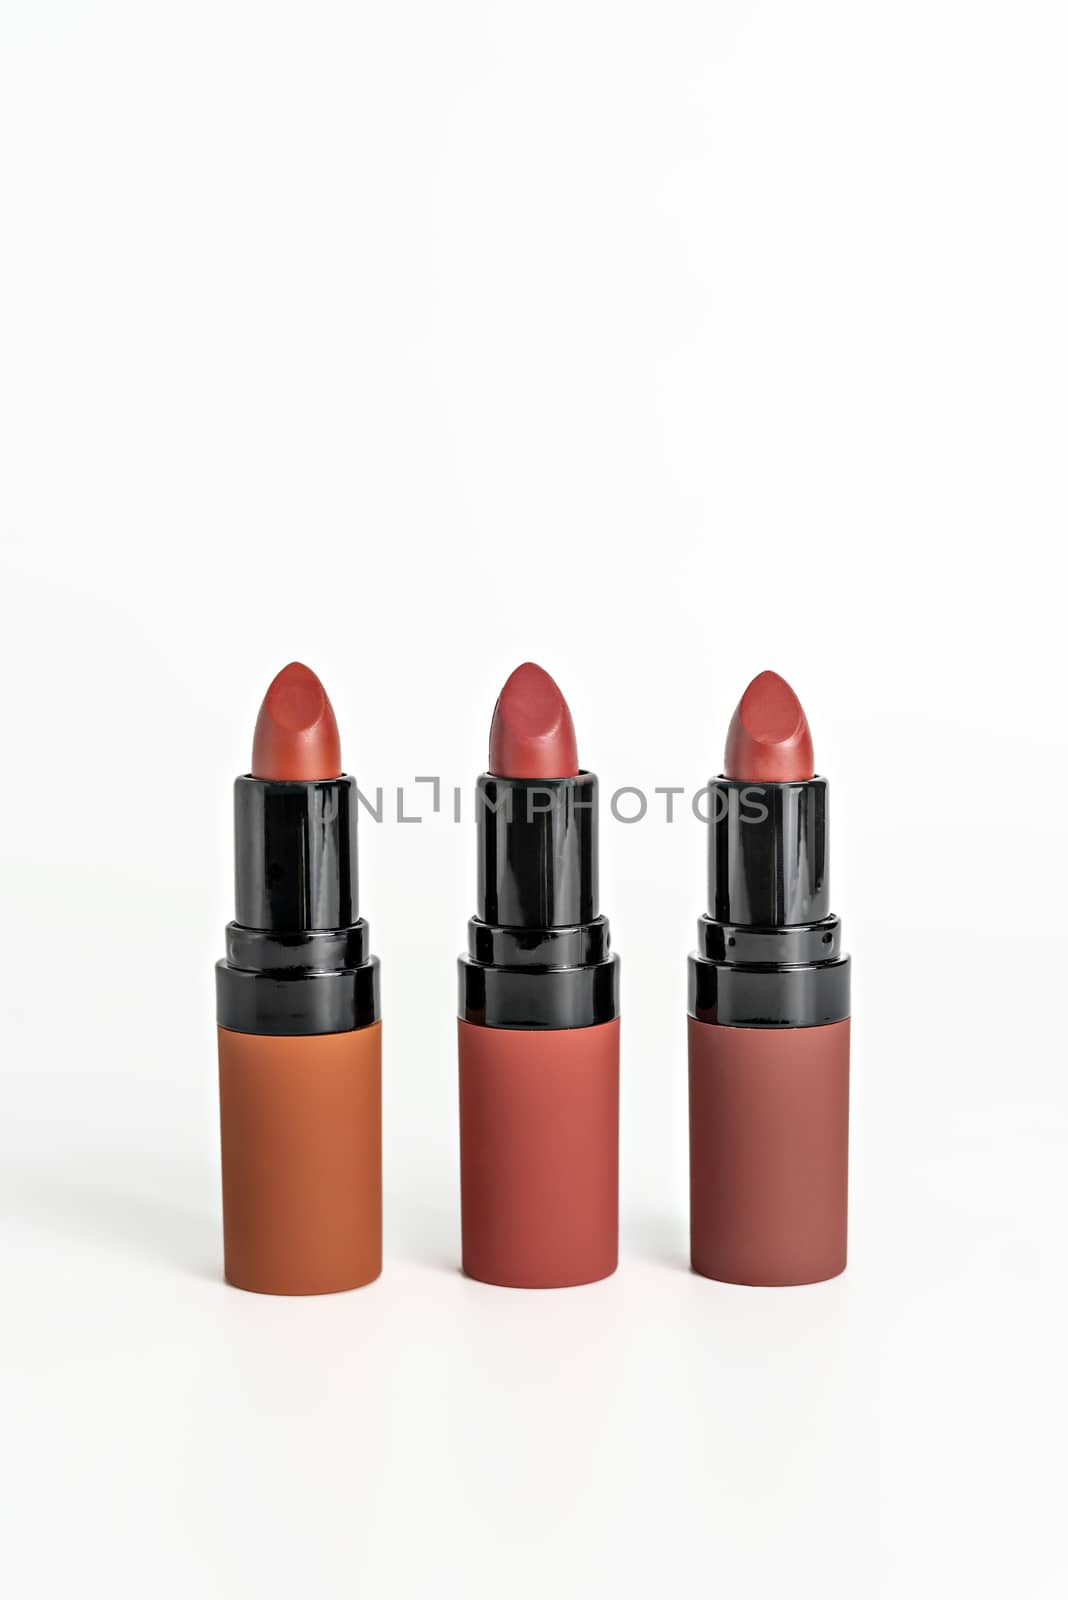 Set of colorful lipsticks by rakratchada